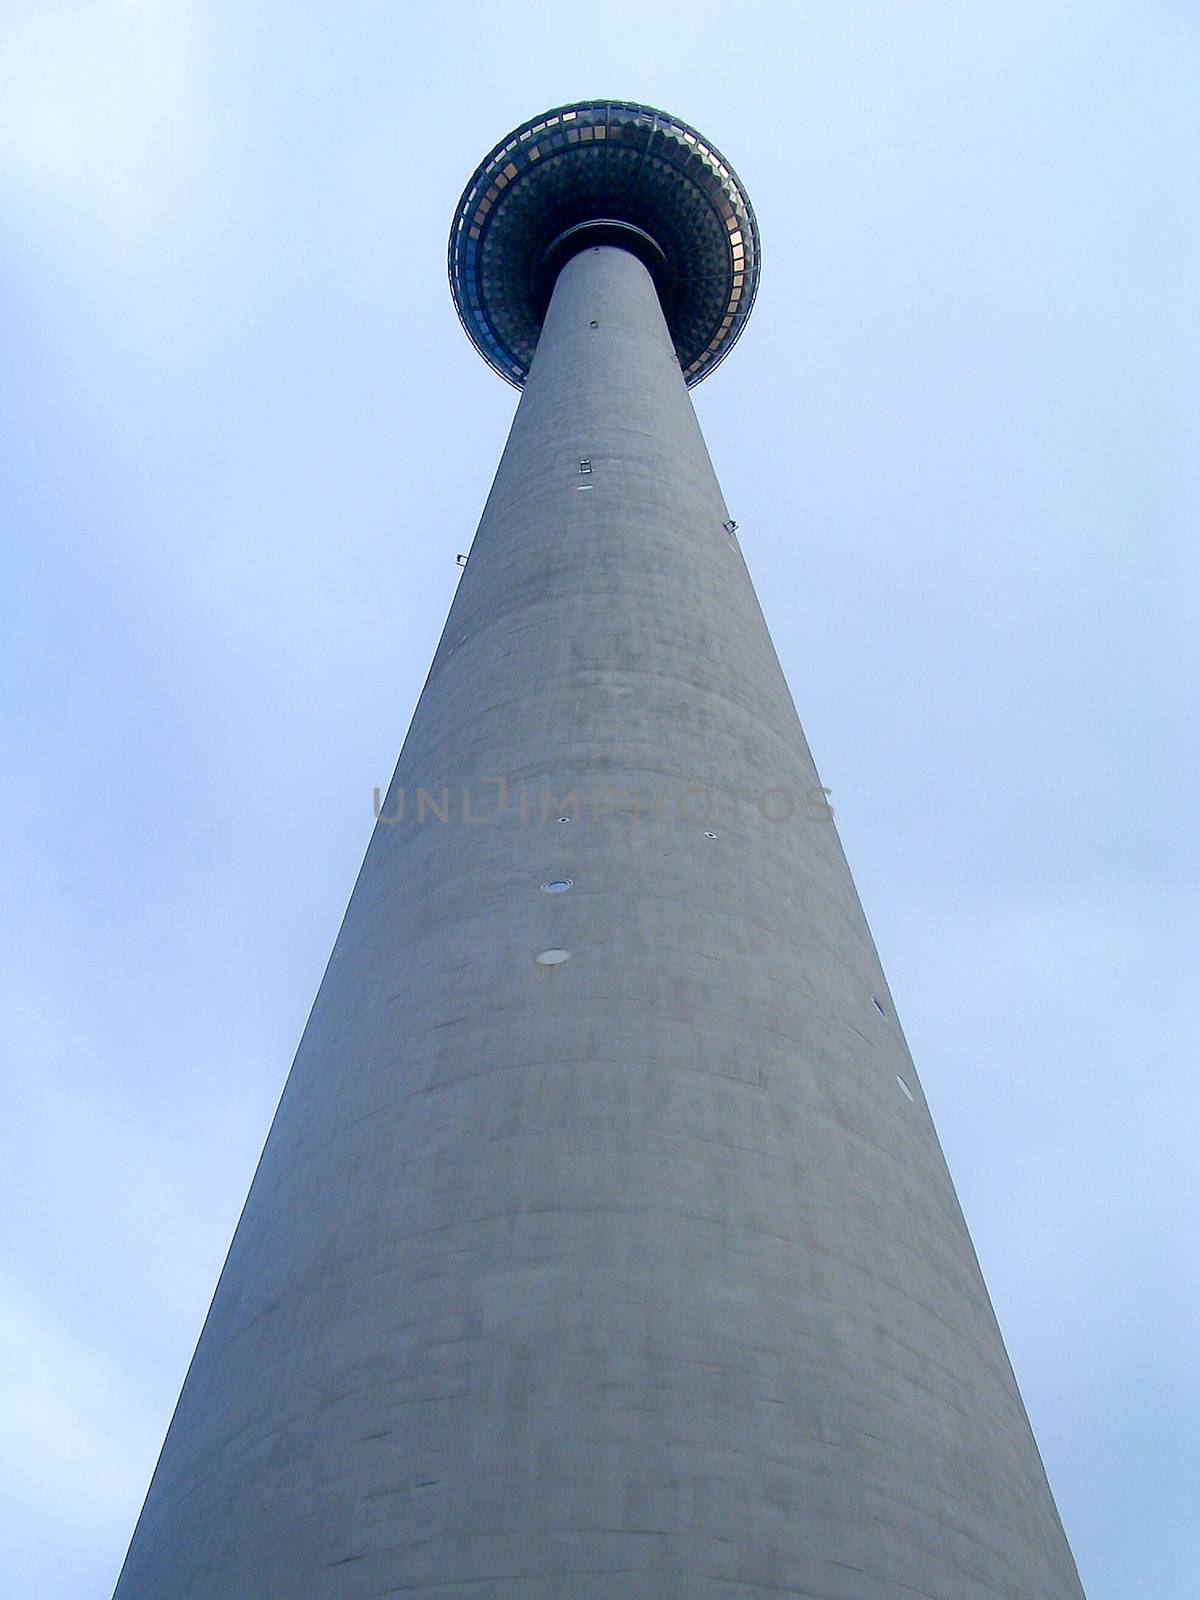 Fernsehturm (TV Tower) in Alexanderplatz, Berlin by marcorubino